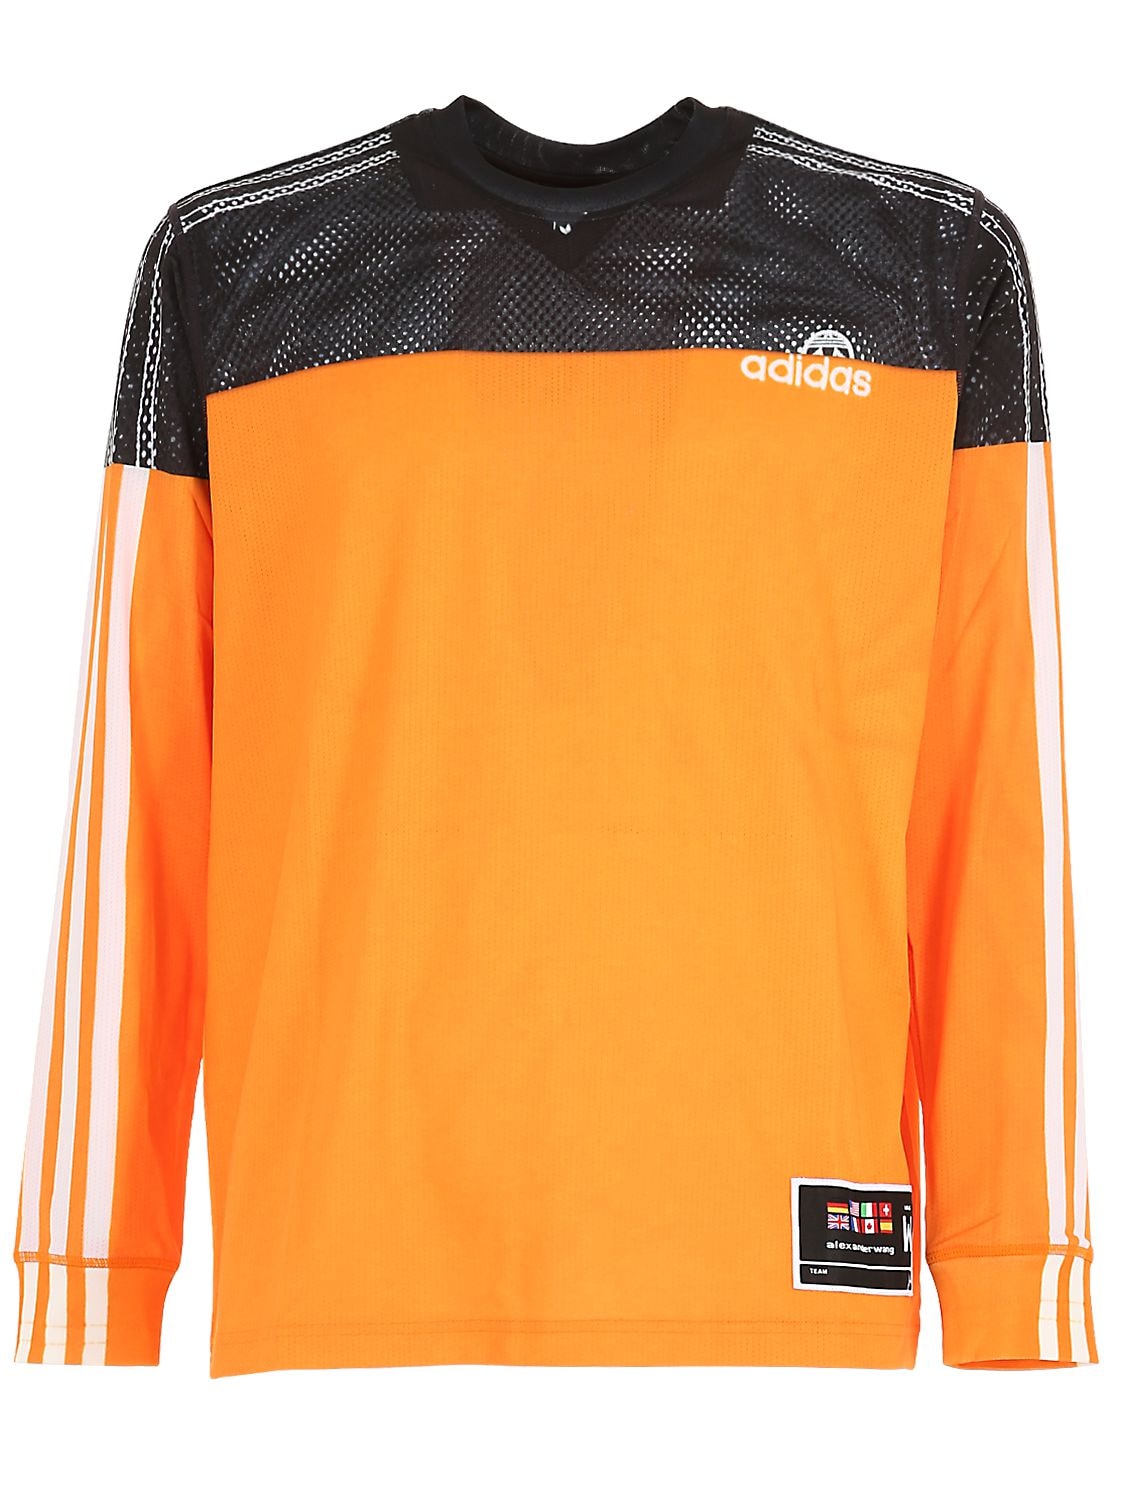 Adidas Originals By Alexander Wang Upside Down Logo Print Techno T-shirt In Black,orange